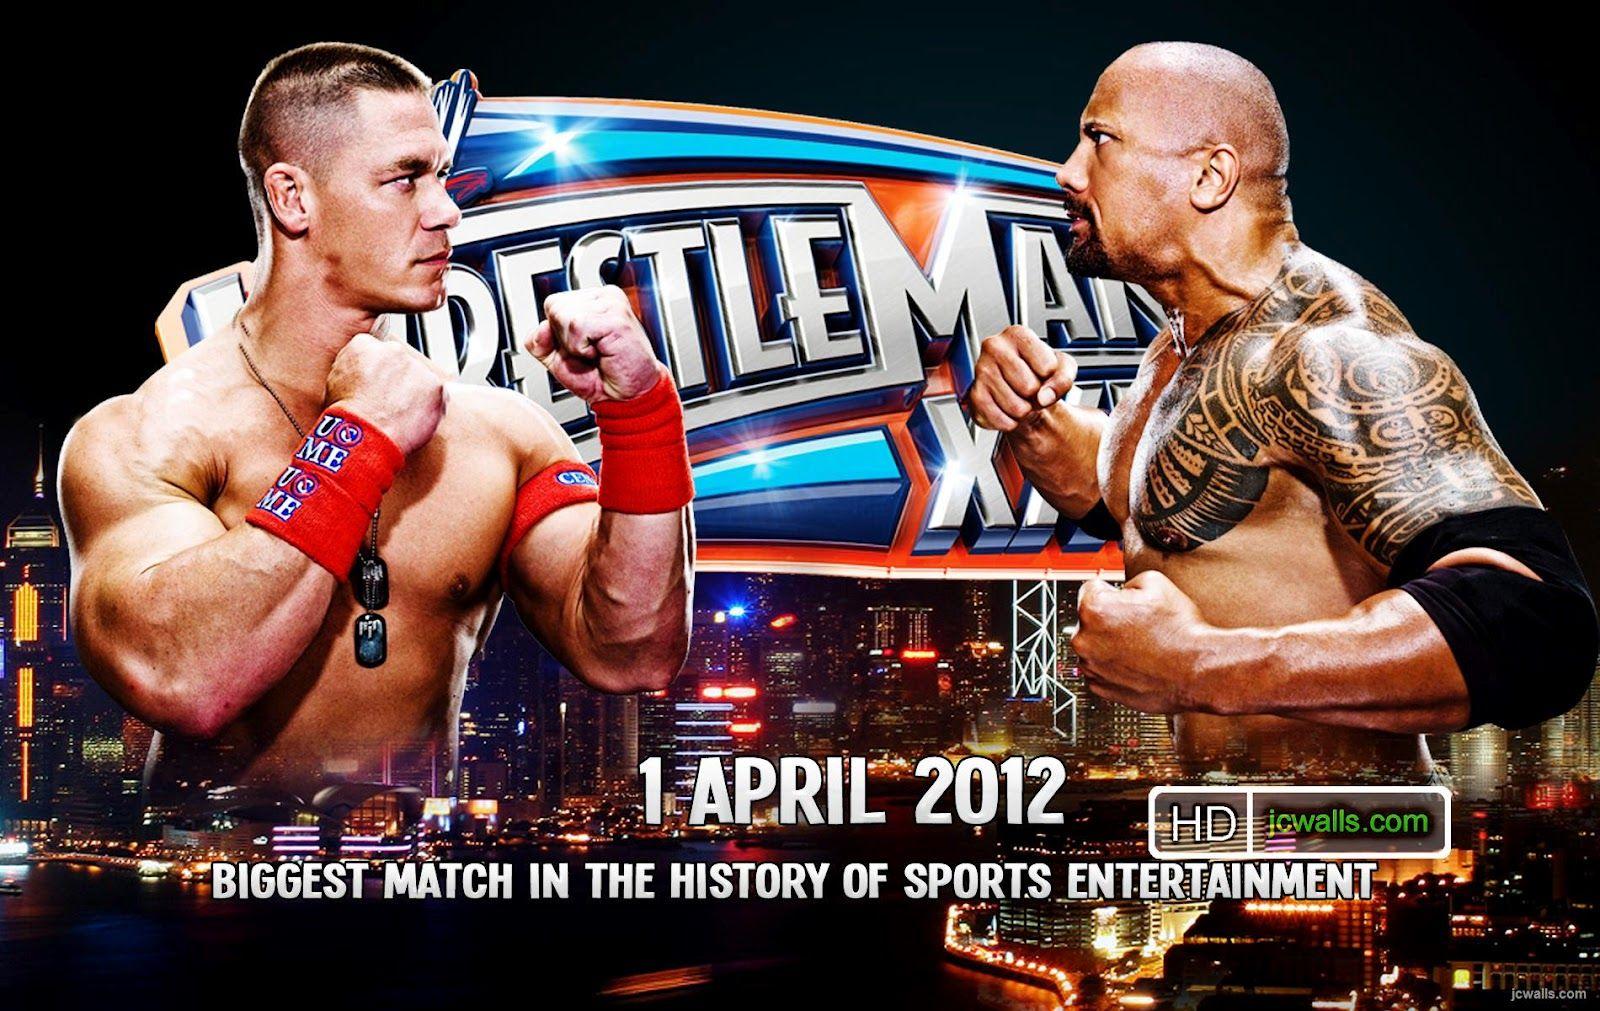 Rock Vs Cena WrestleMania 28 Wallpaper. Best HD Wallpaper